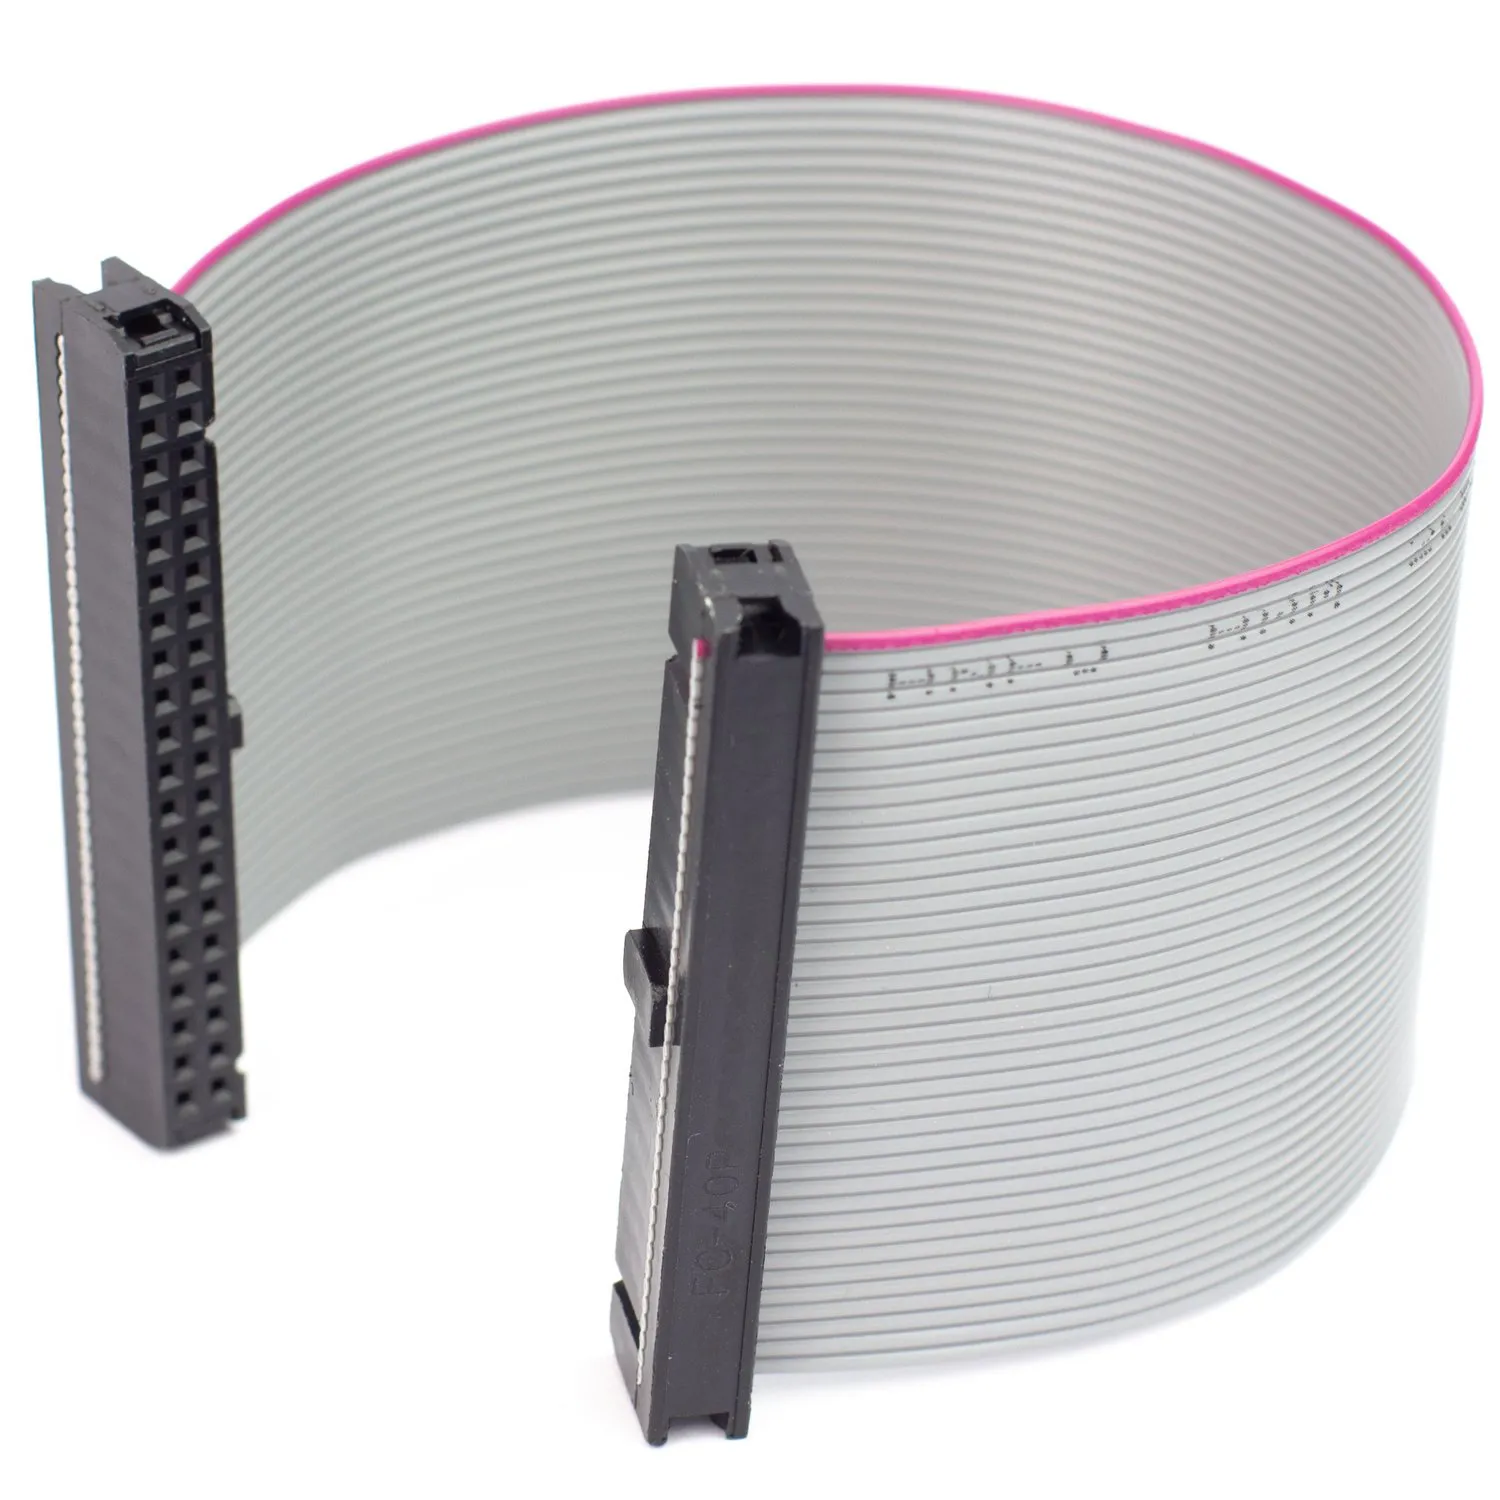 Photo of 40-pin GPIO Ribbon Cable for Raspberry Pi - Black